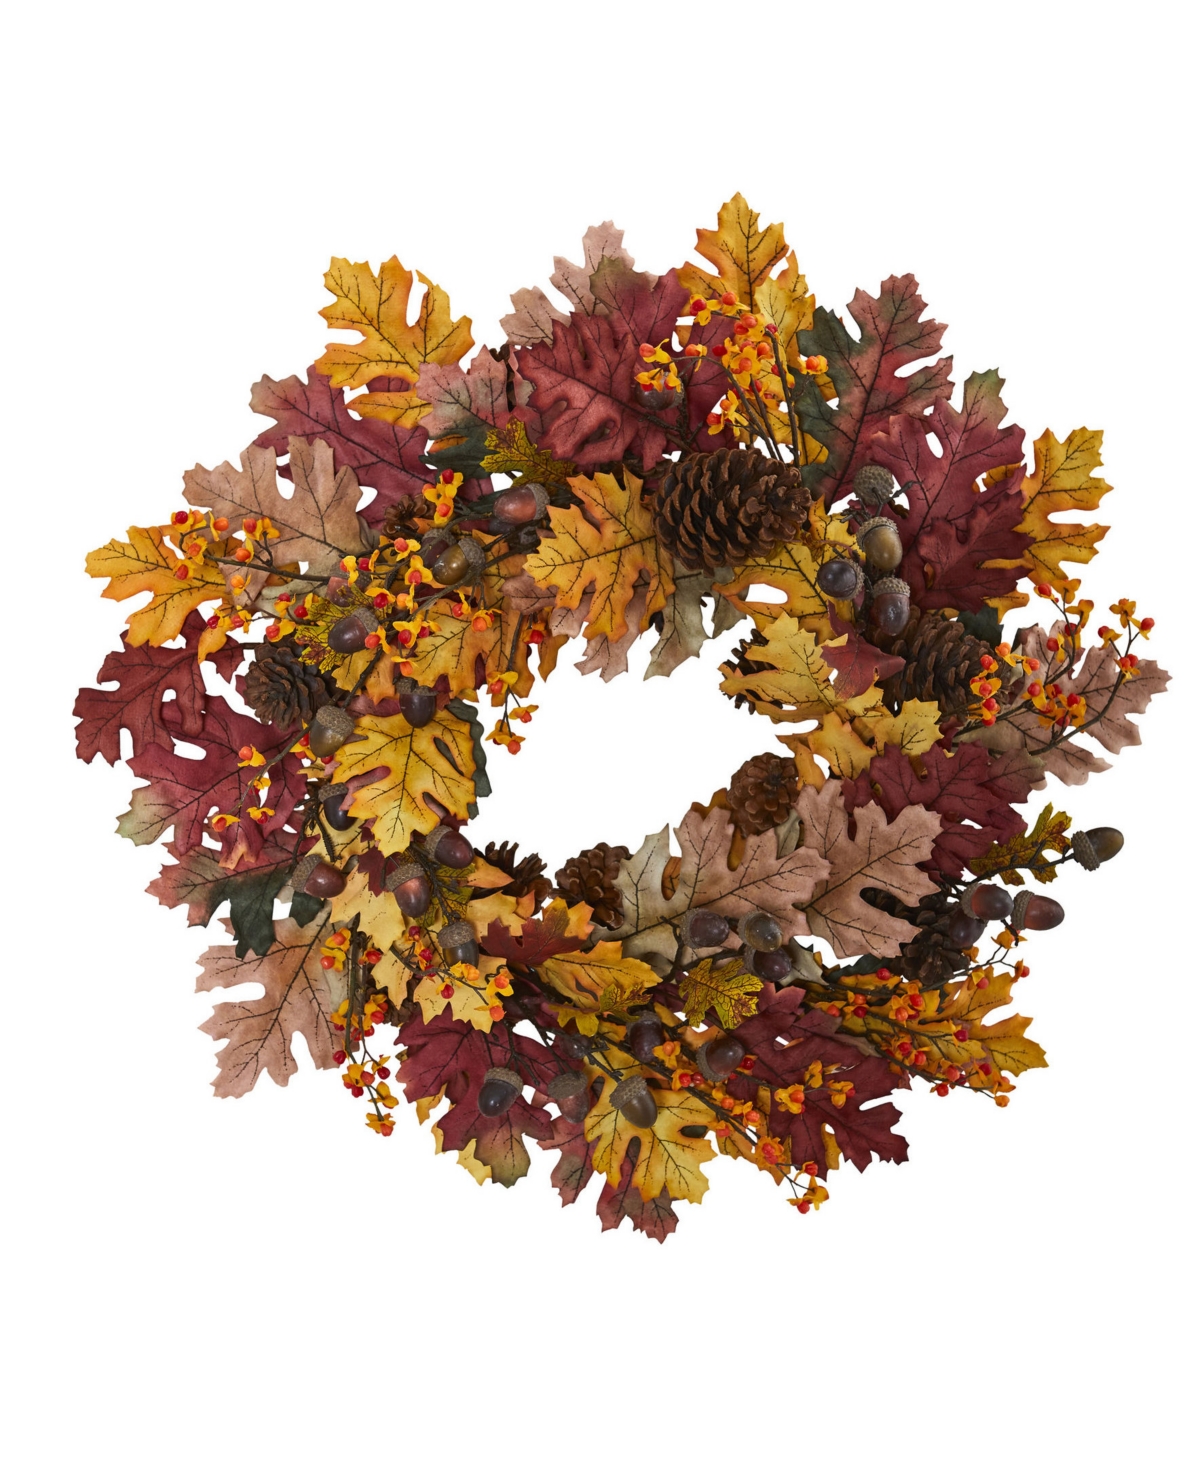 24" Oak Leaf, Acorn and Pine Wreath - Multi